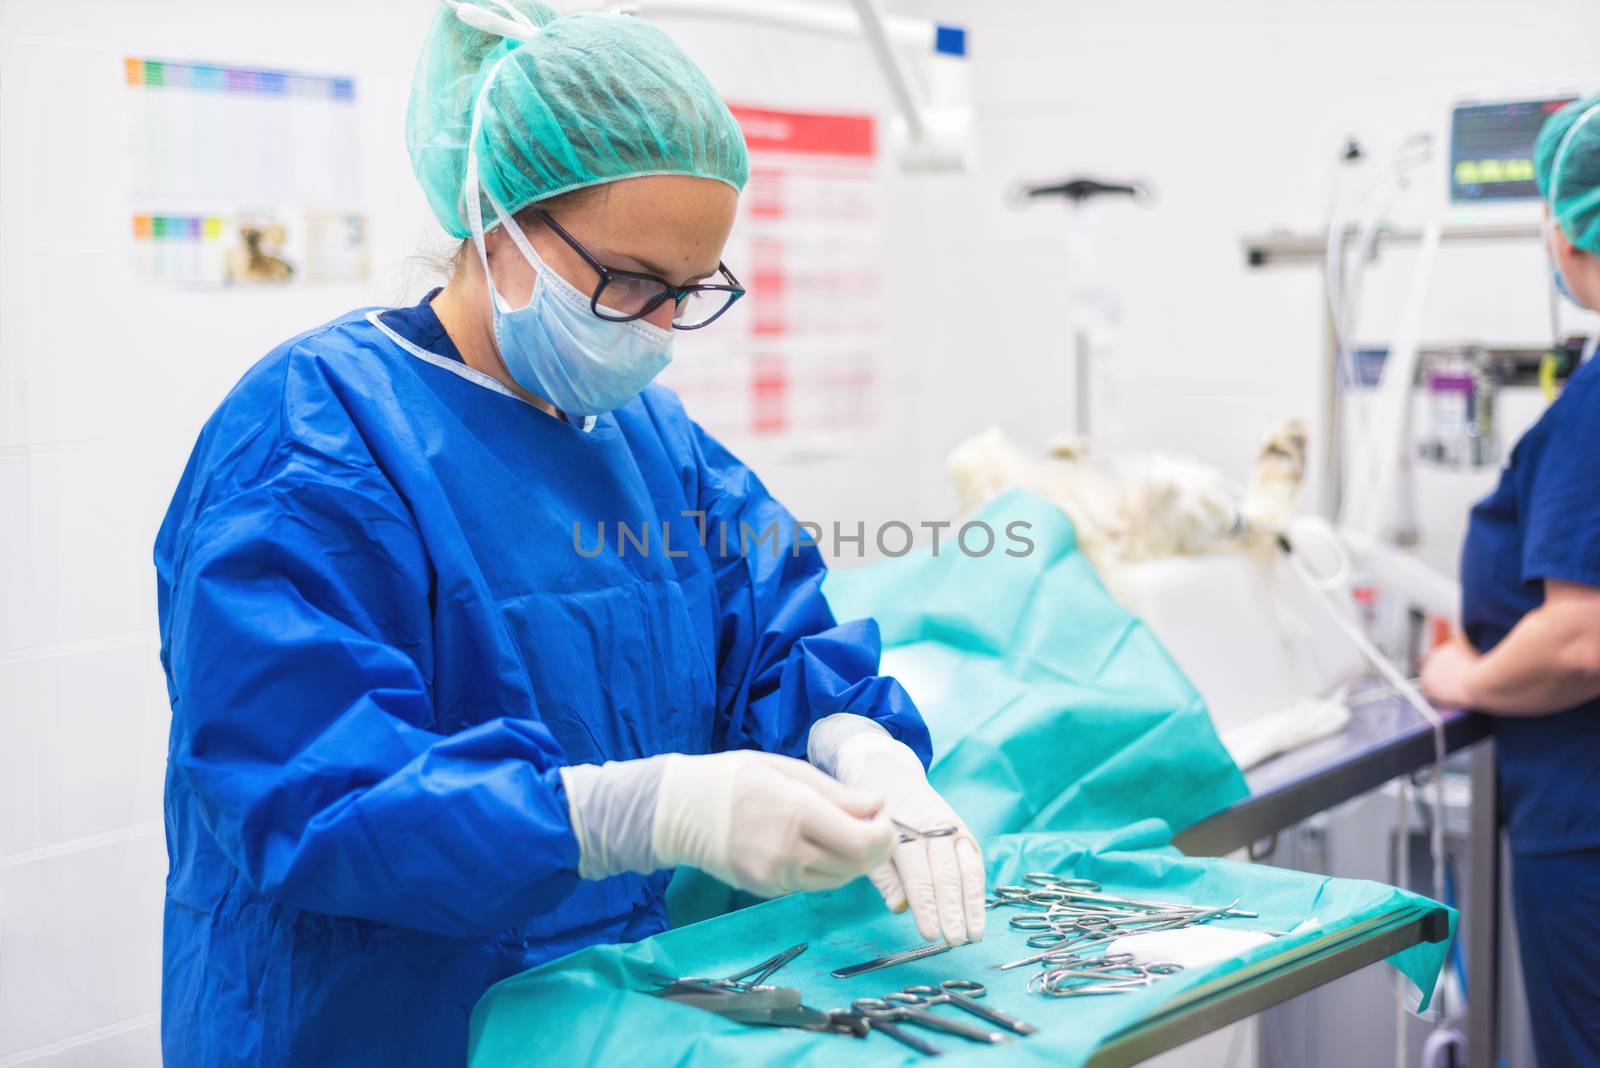 Veterinary surgeon with scalpel